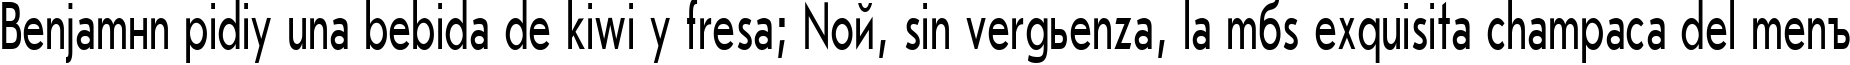 Пример написания шрифтом Journal SansSerif Plain:001.00160n текста на испанском